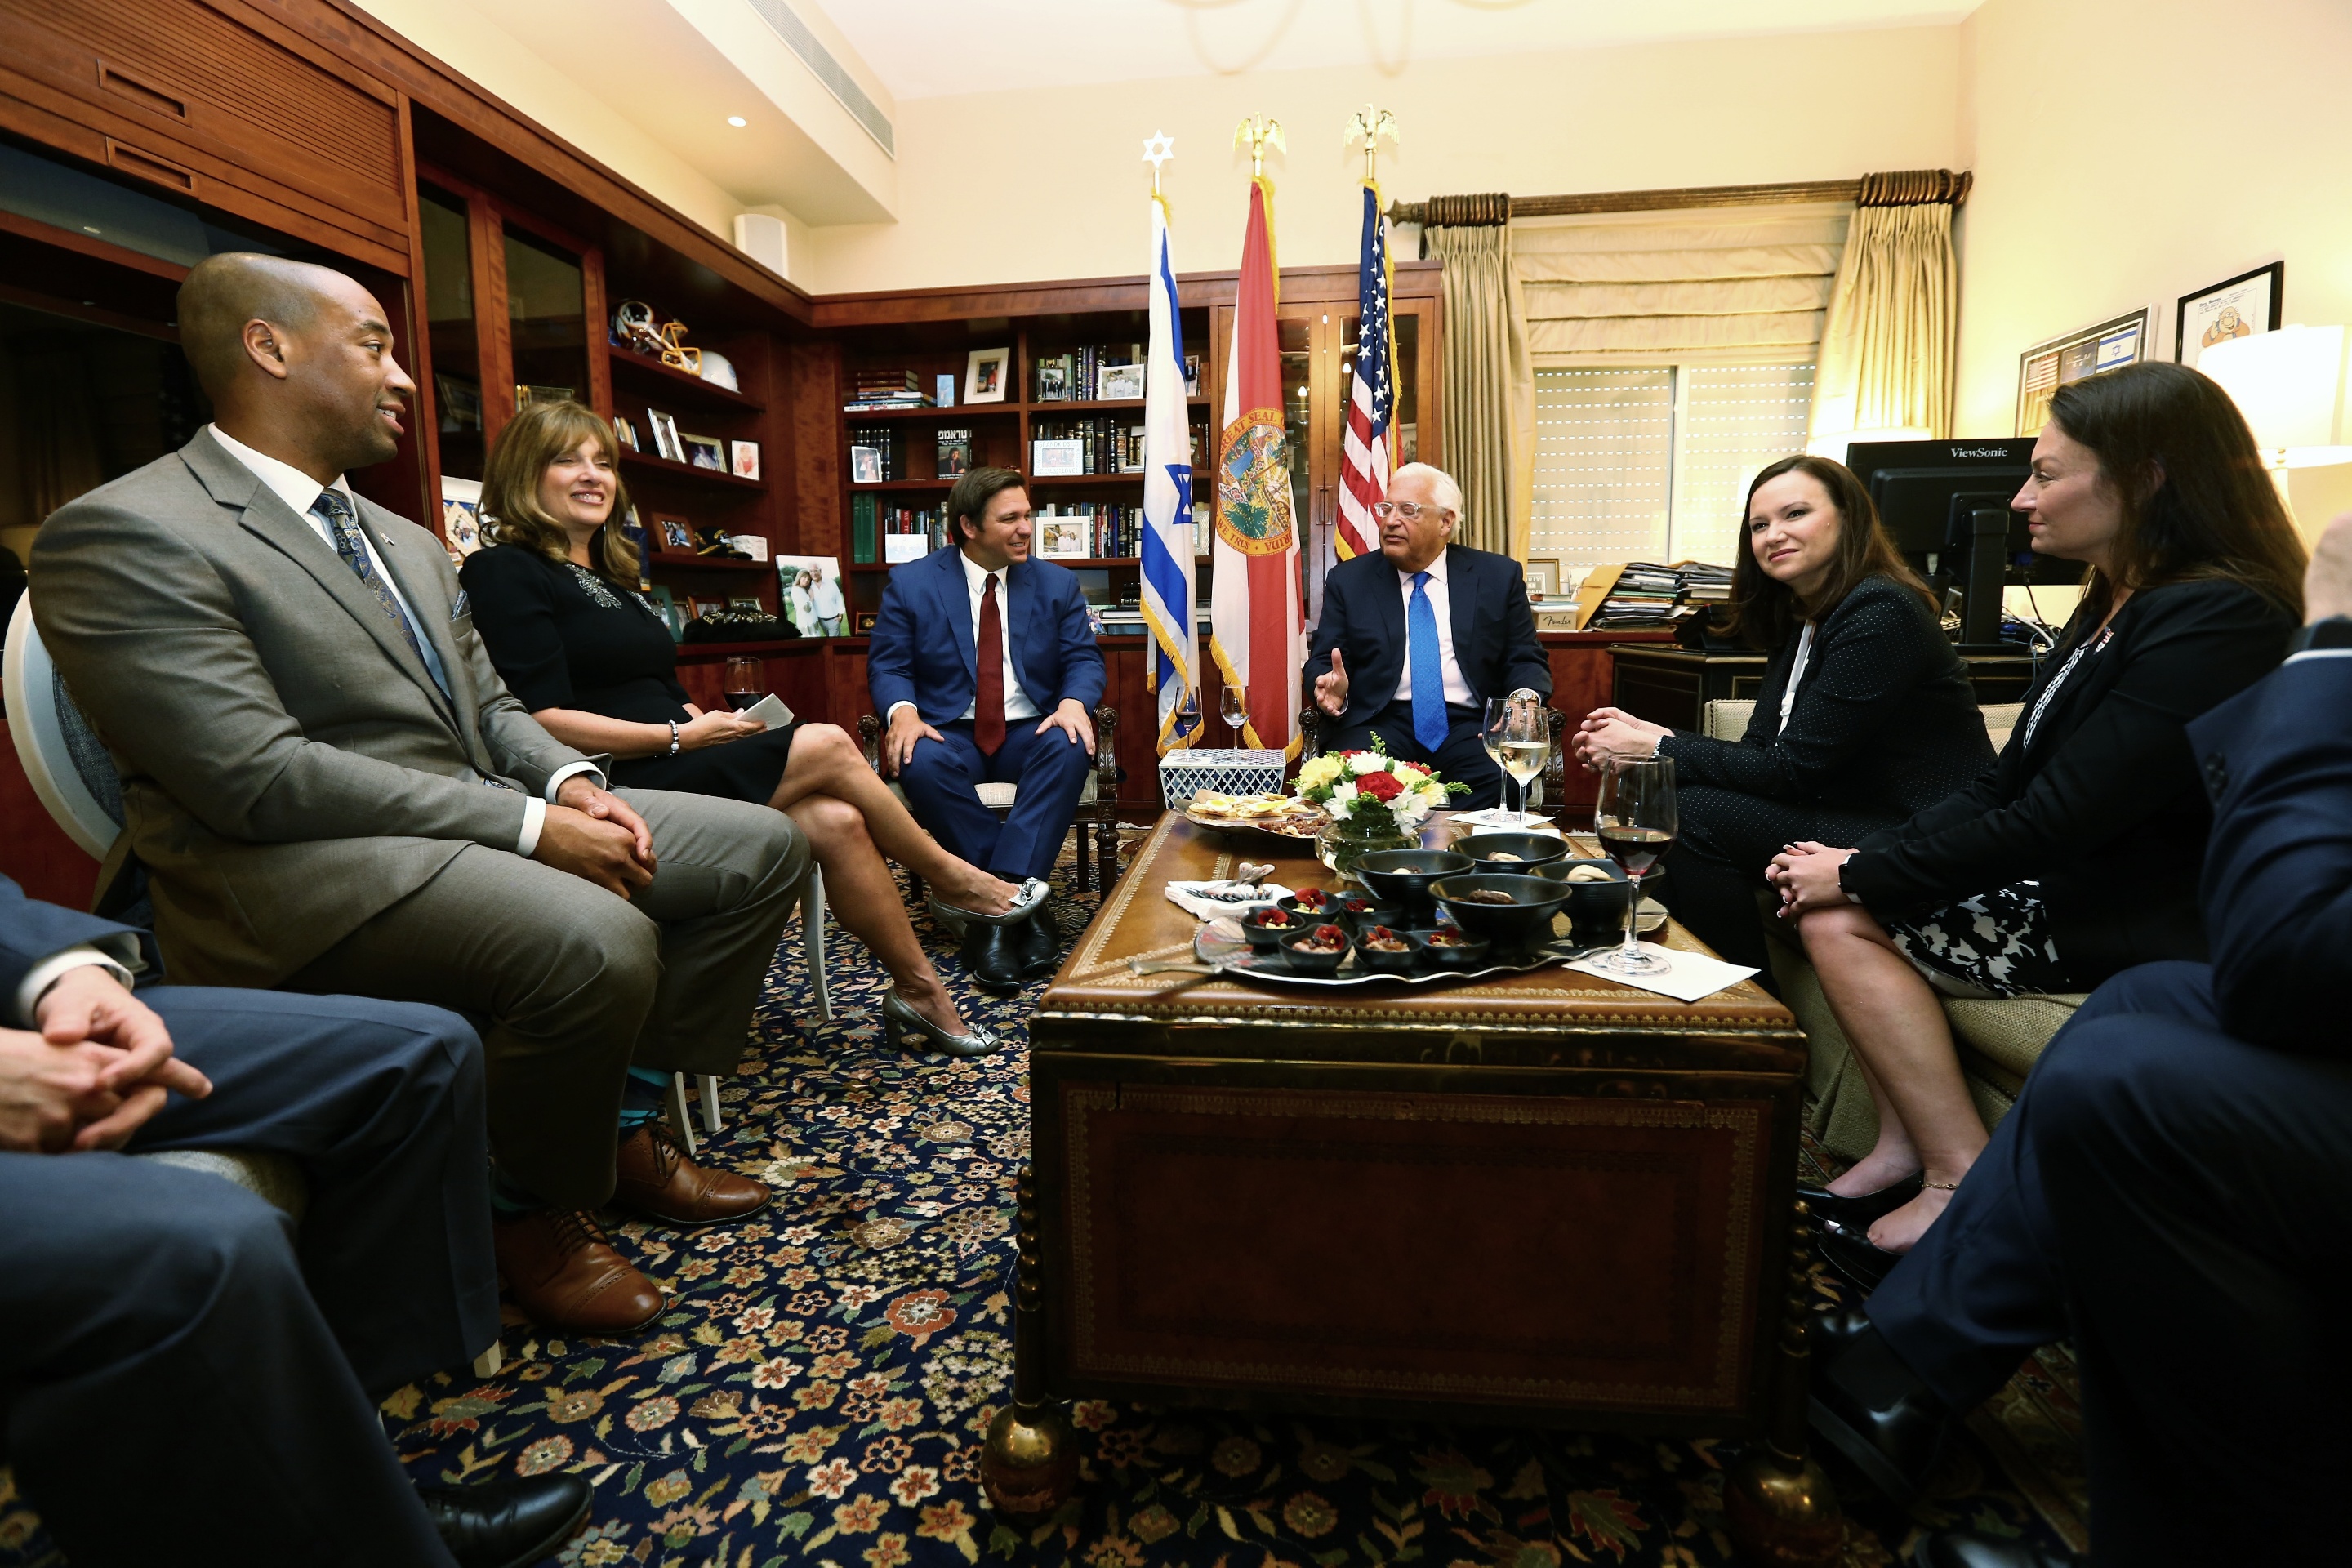   PHOTO RELEASE Governor Ron DeSantis and Florida Cabinet Meet with U.S. Ambassador to Israel David Friedman